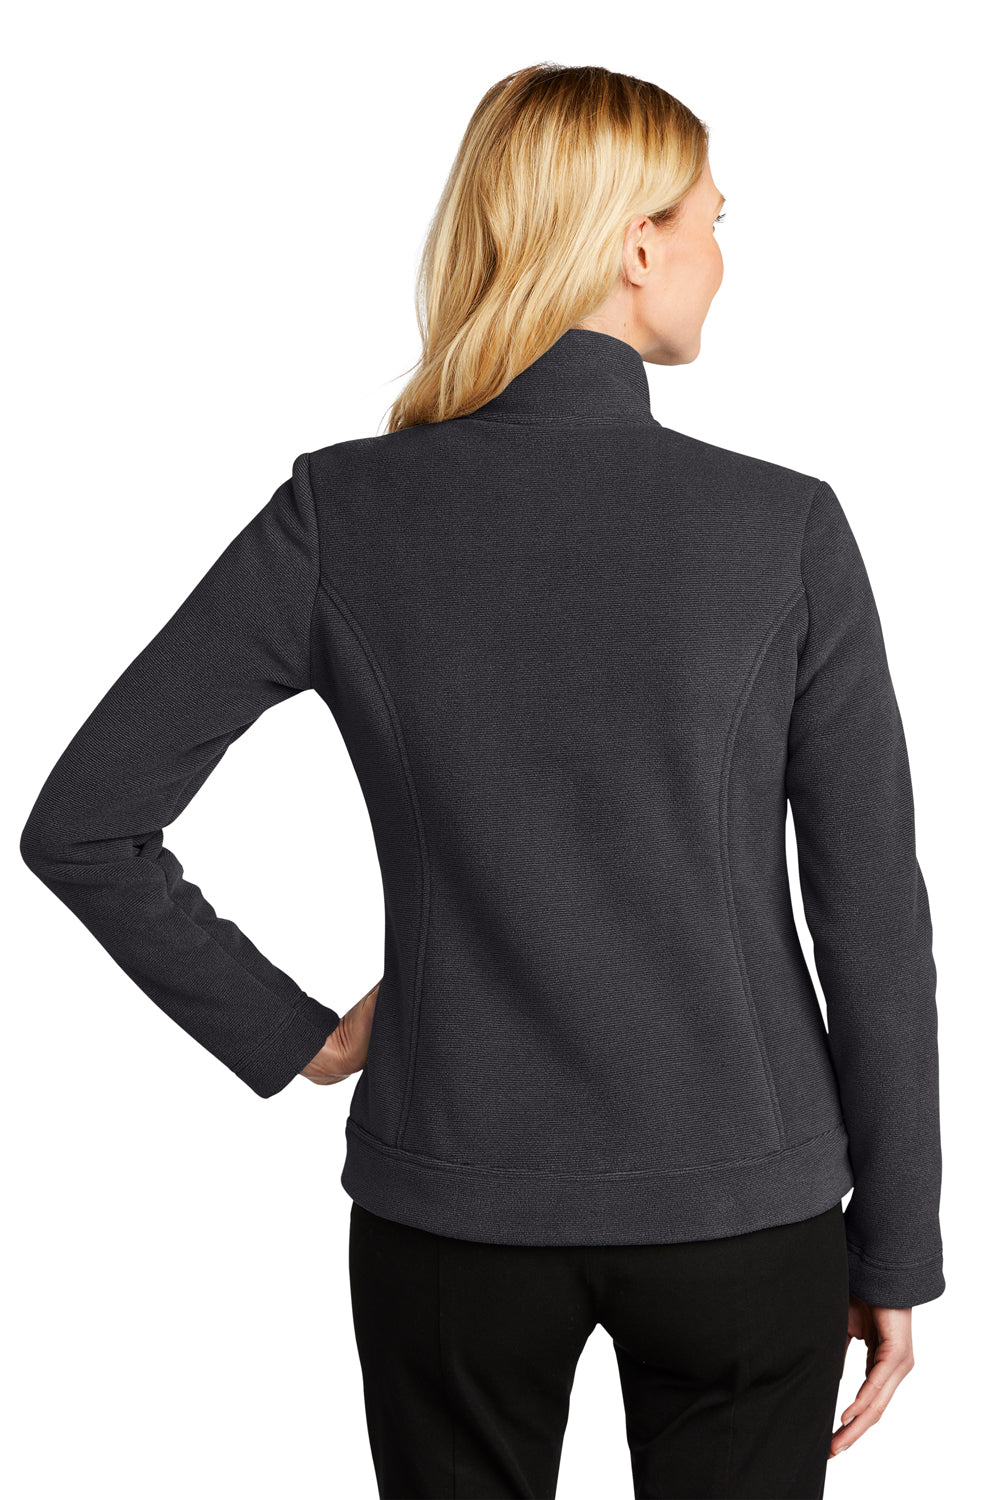 Port Authority Womens Ultra Warm Brushed Fleece Full Zip Jacket Graphite Grey/Deep Black Side